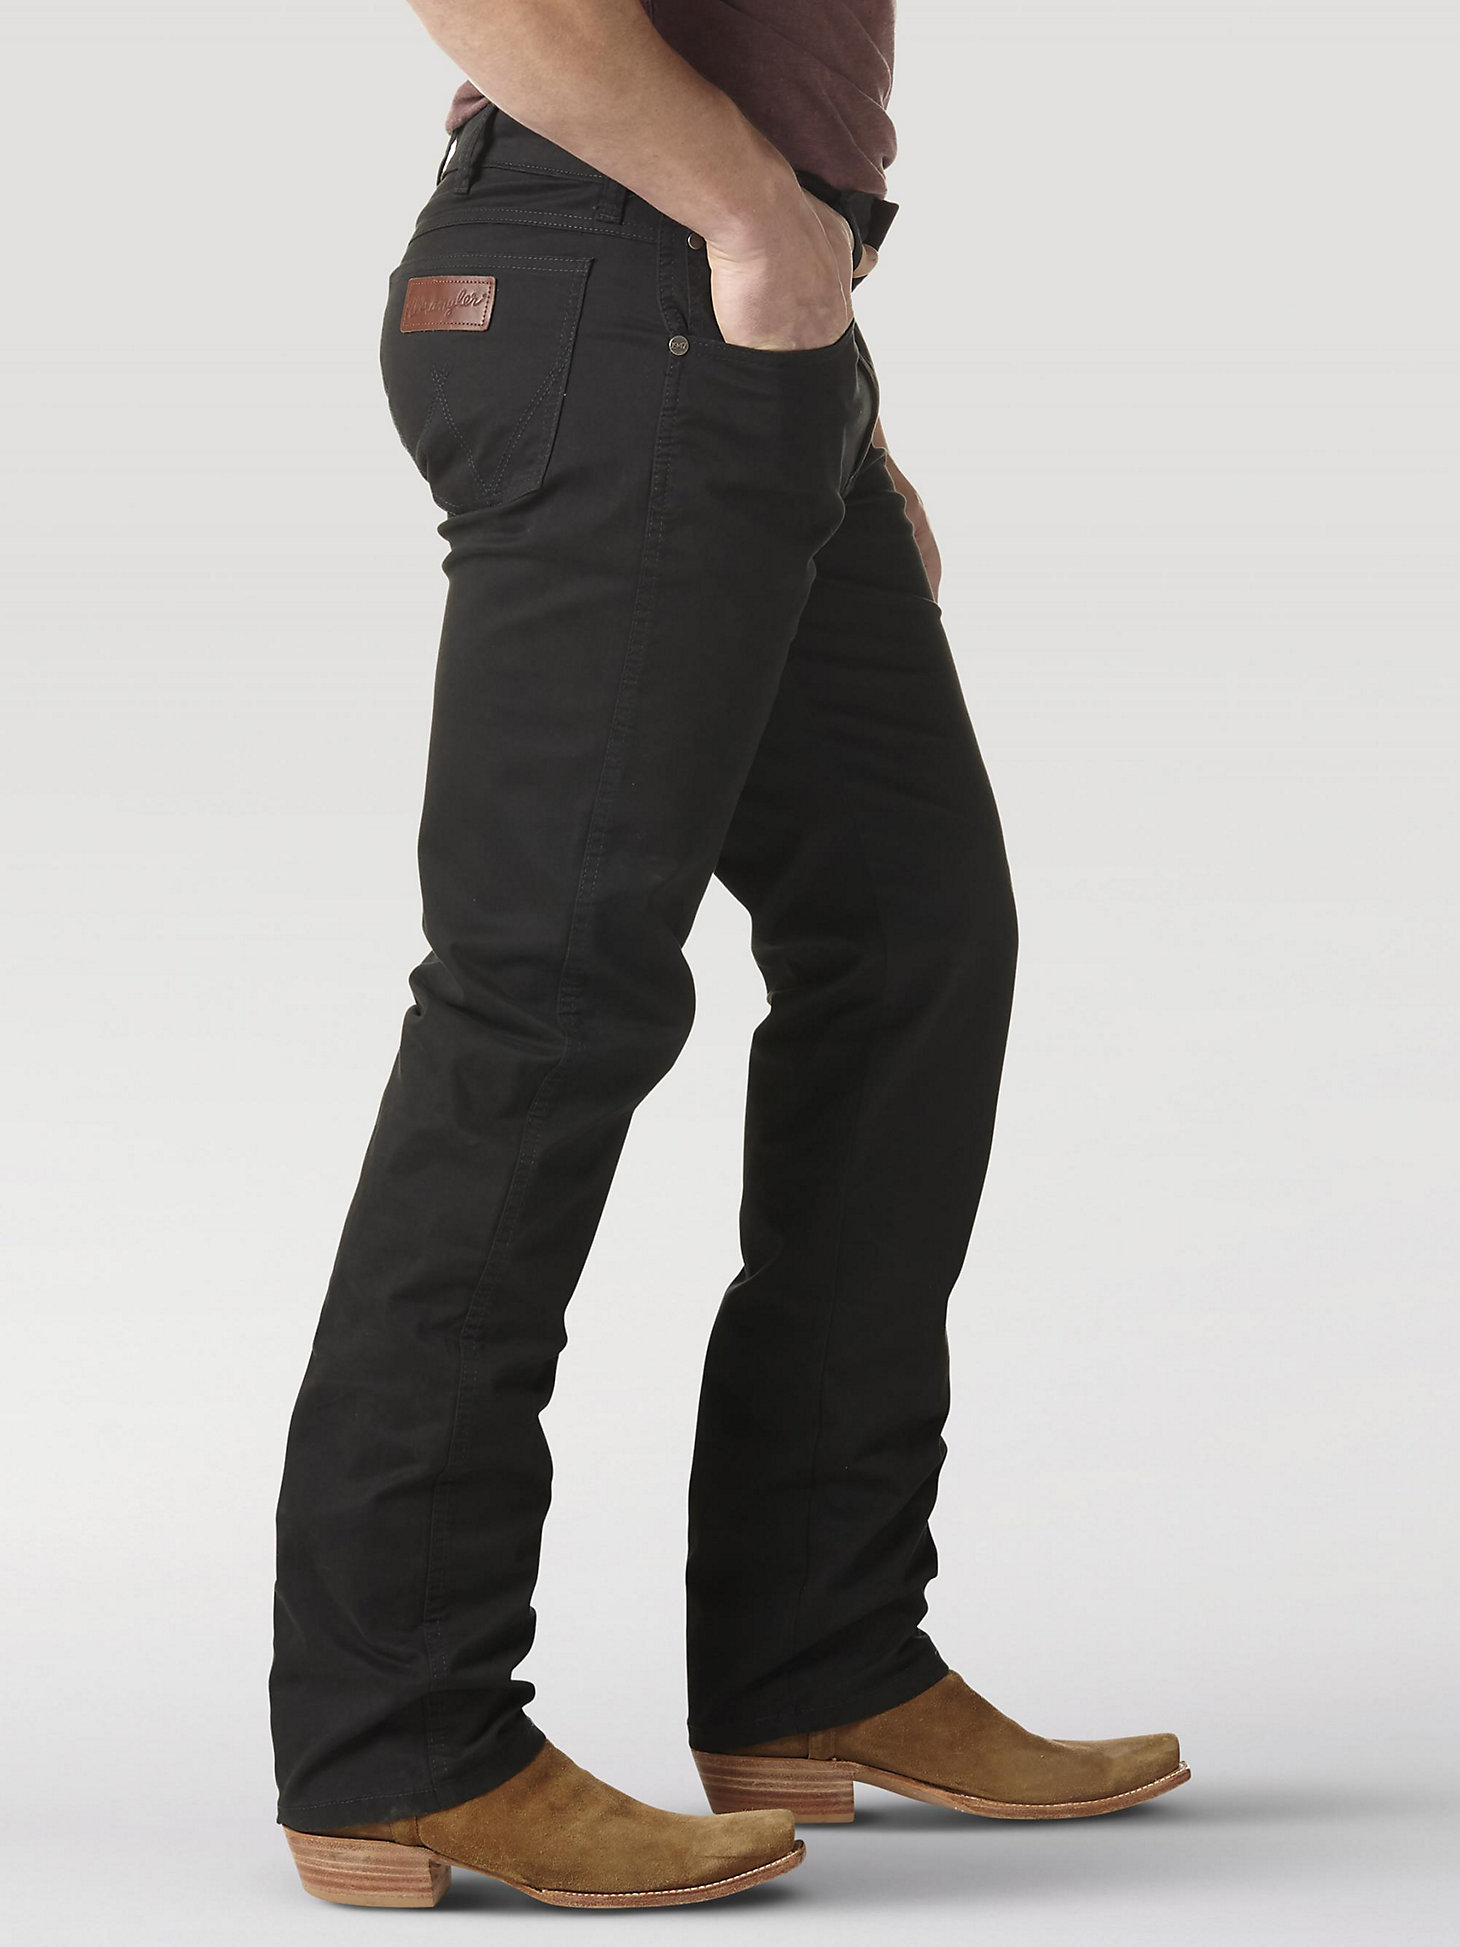 Men's Wrangler Retro® Slim Fit Straight Leg Pant in Black alternative view 1